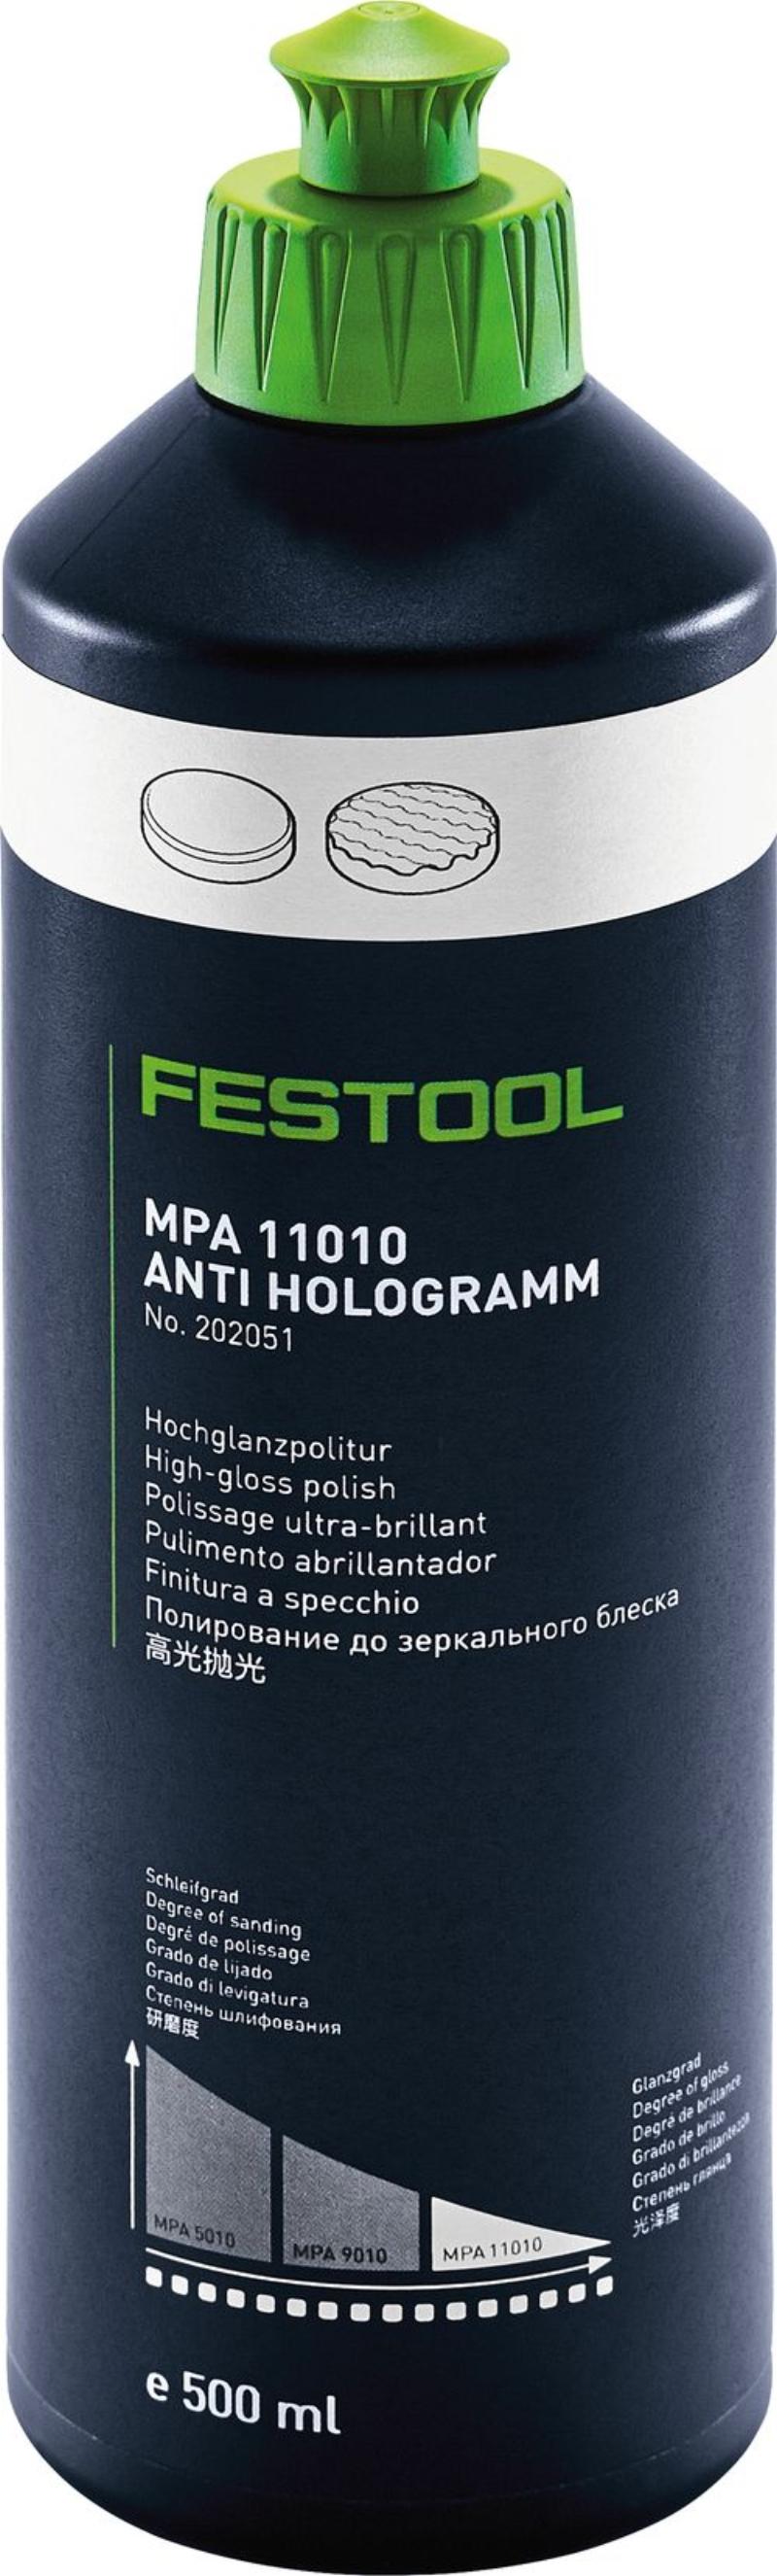 Festool Polishing agent MPA 11010 WH/0.5L